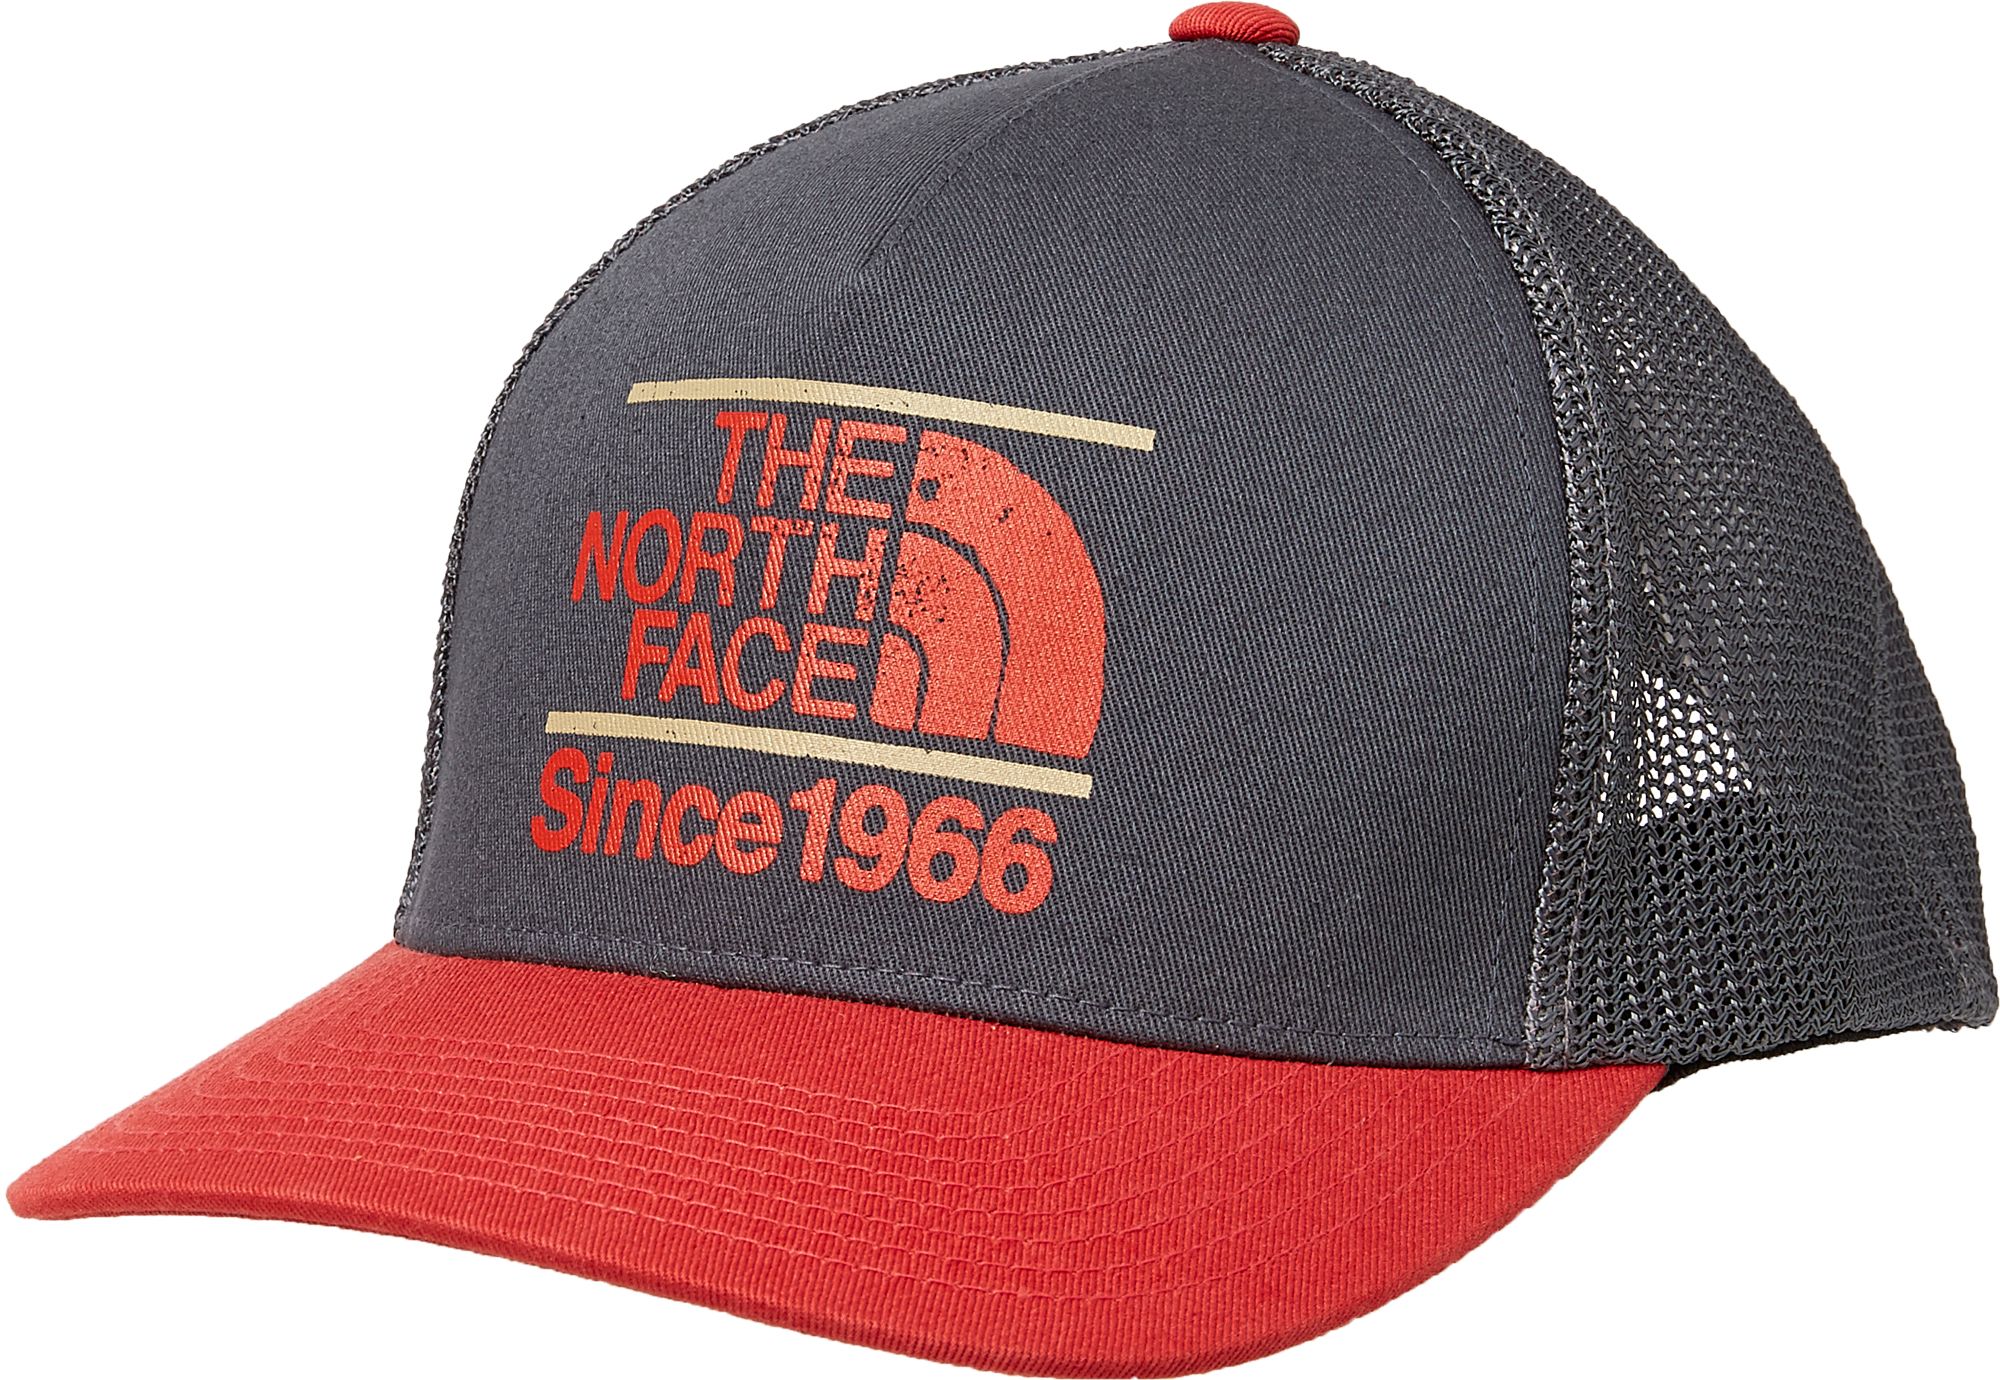 grey north face hat